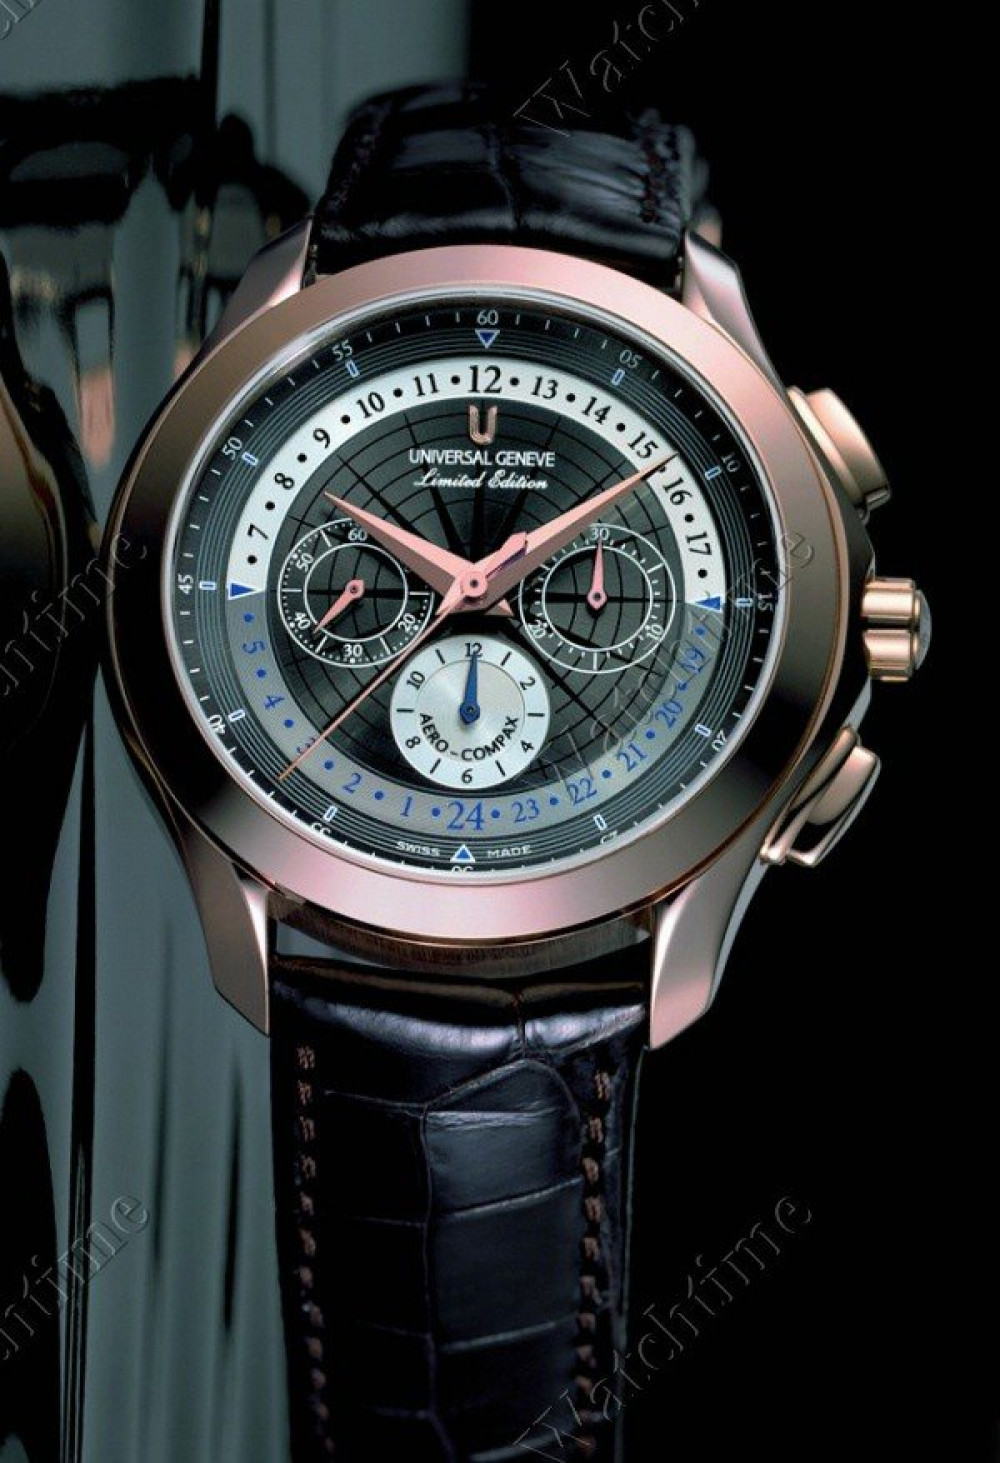 Zegarek firmy Universal Genève, model Okeanos Aero Compax